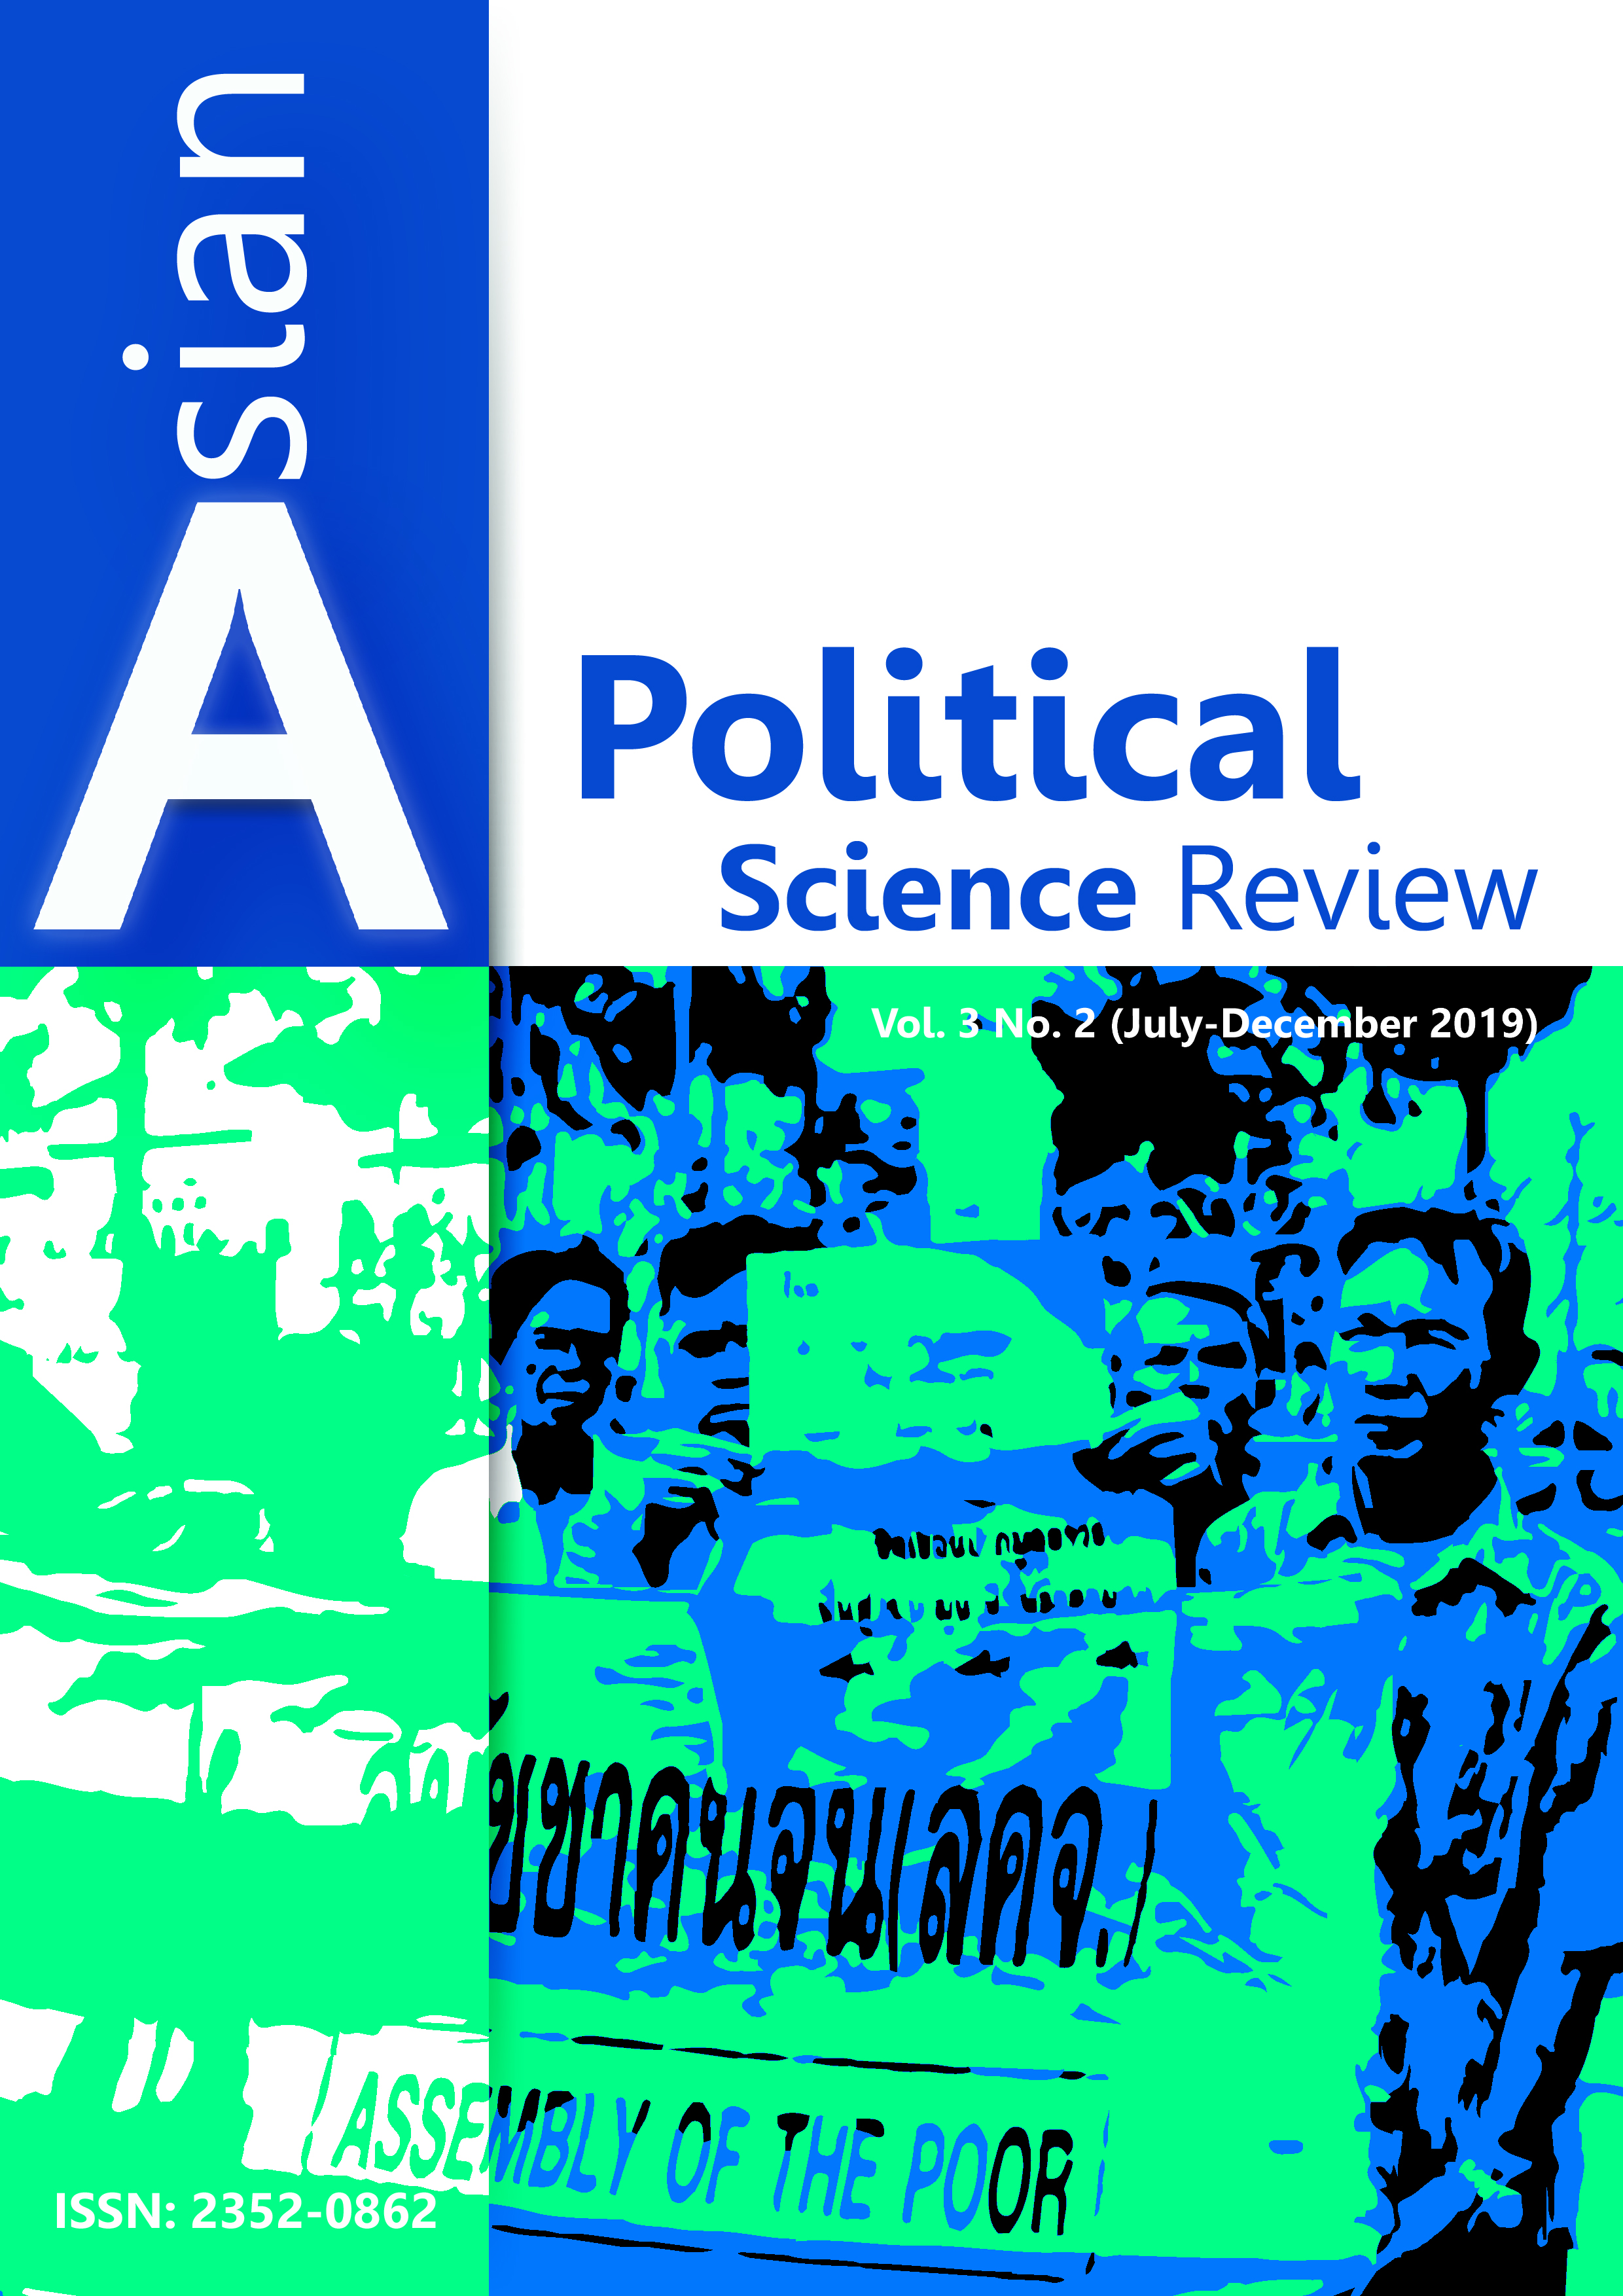 					View Vol. 3 No. 2 (2019): Asian Political Science Review, Vol. 3, No. 2, 2019
				